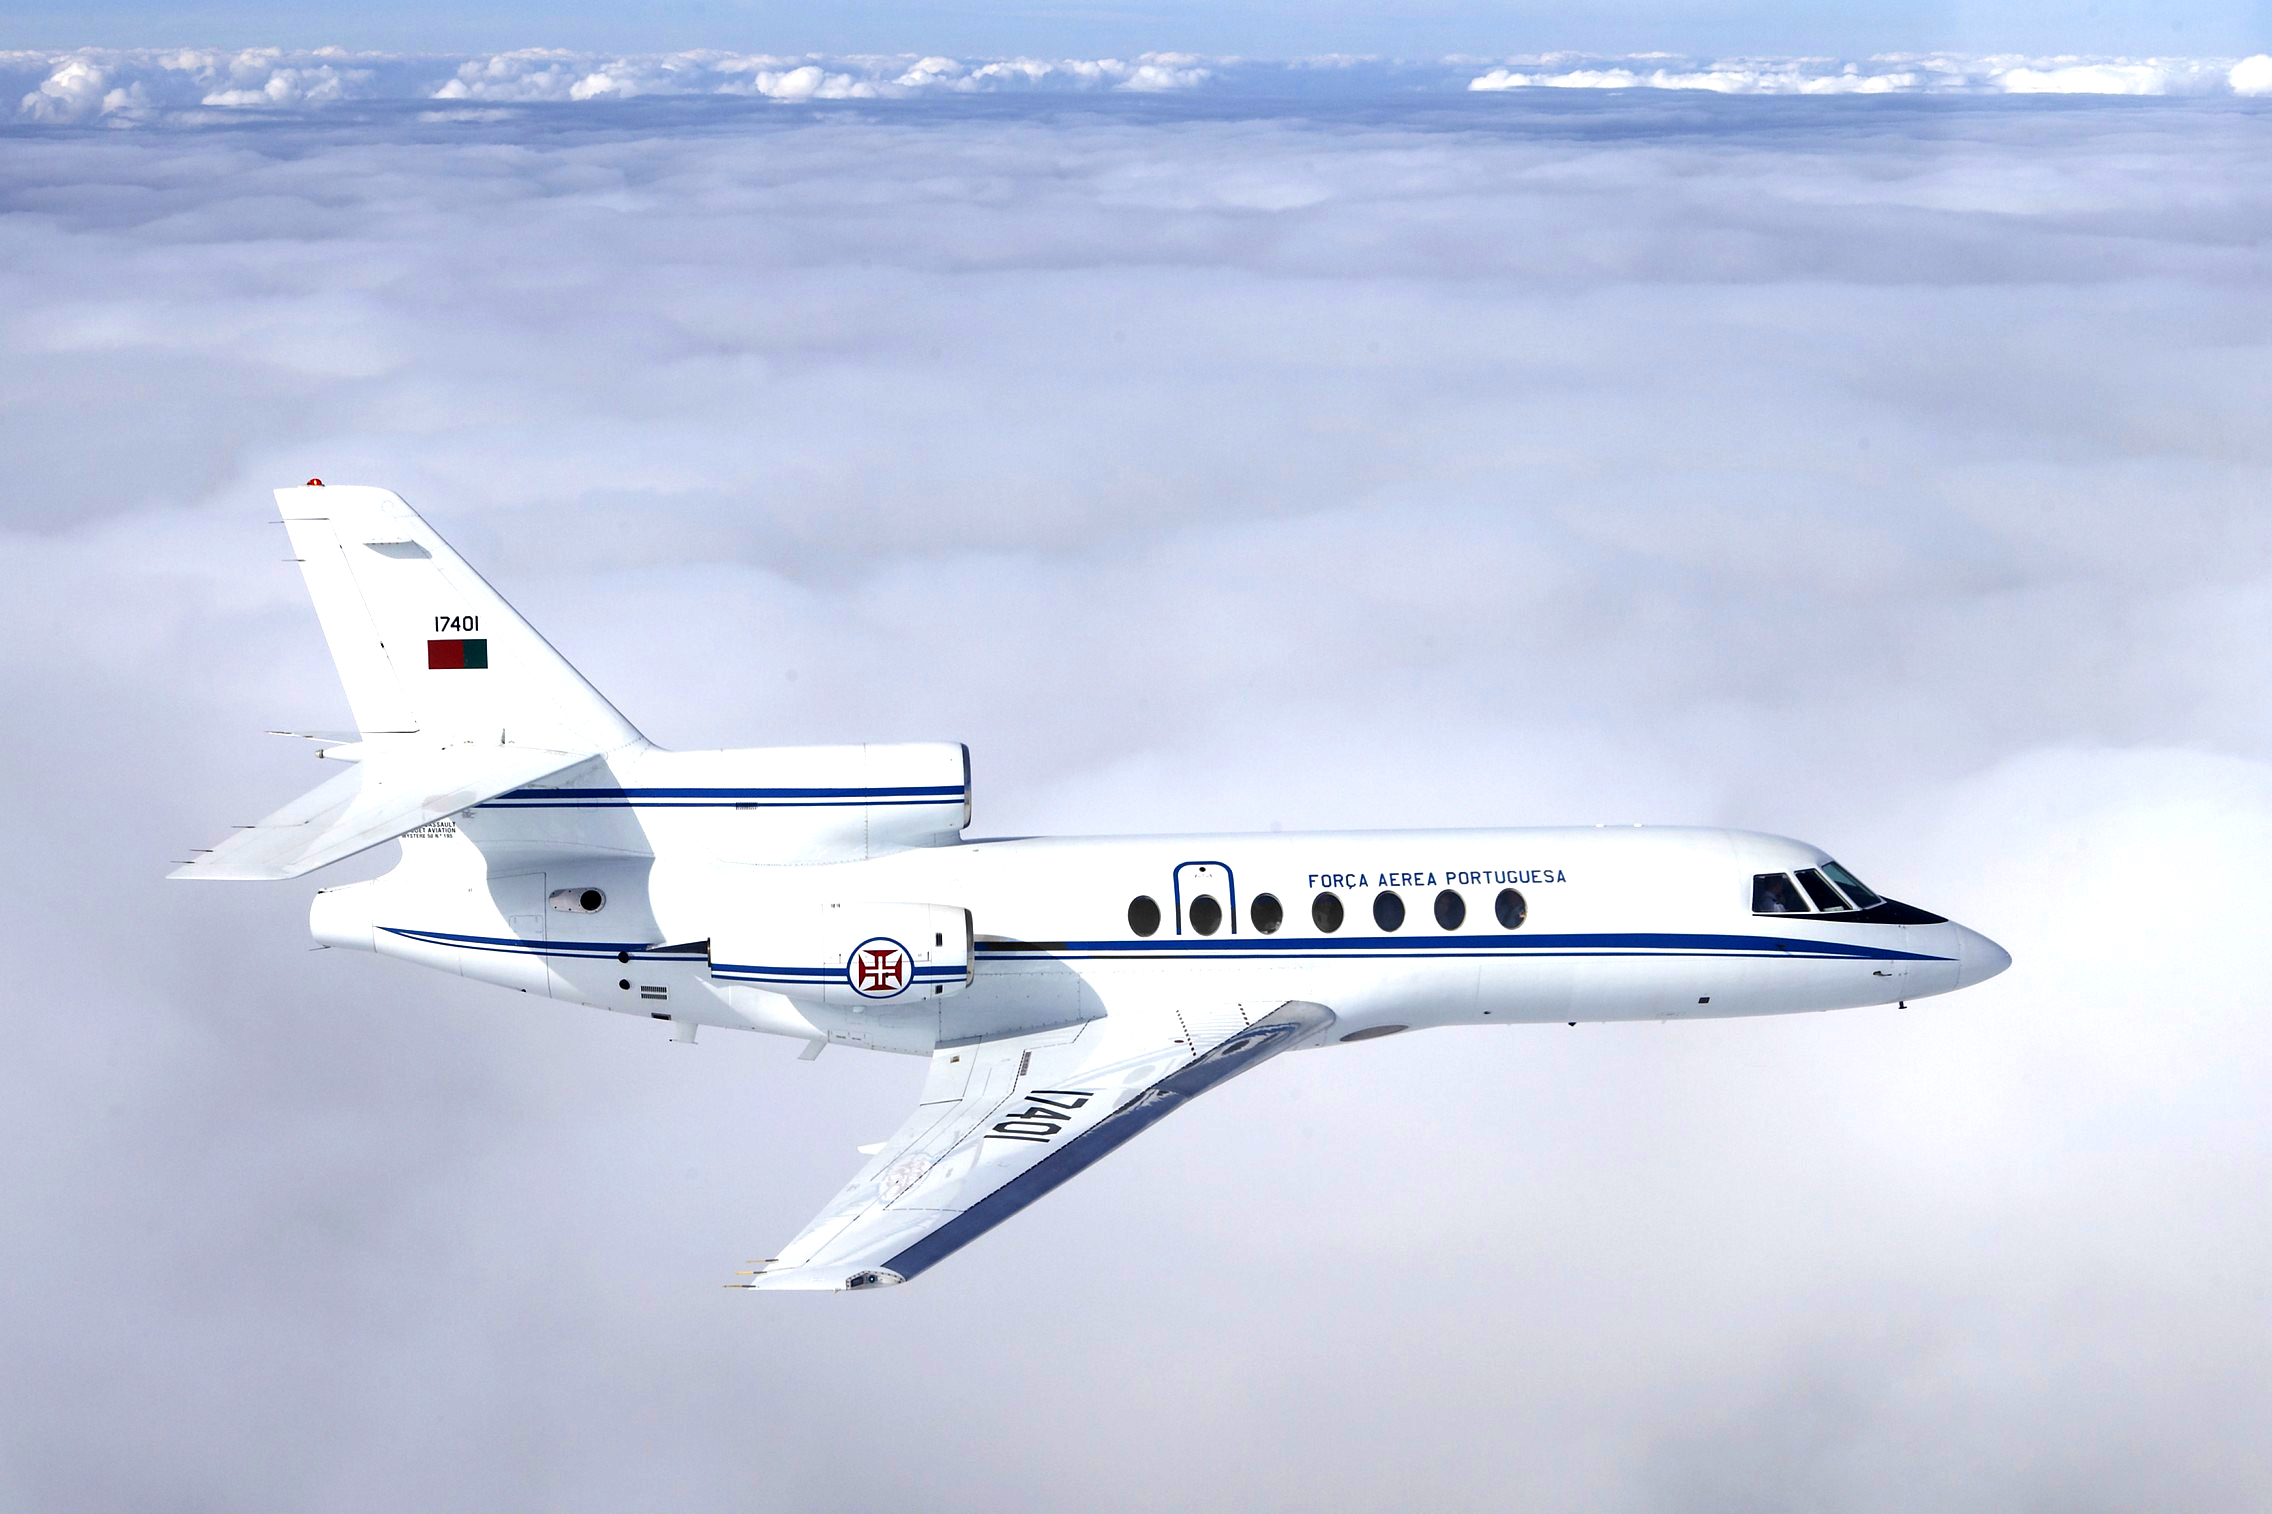 Falcon 50 realiza duas misses aeromdicas